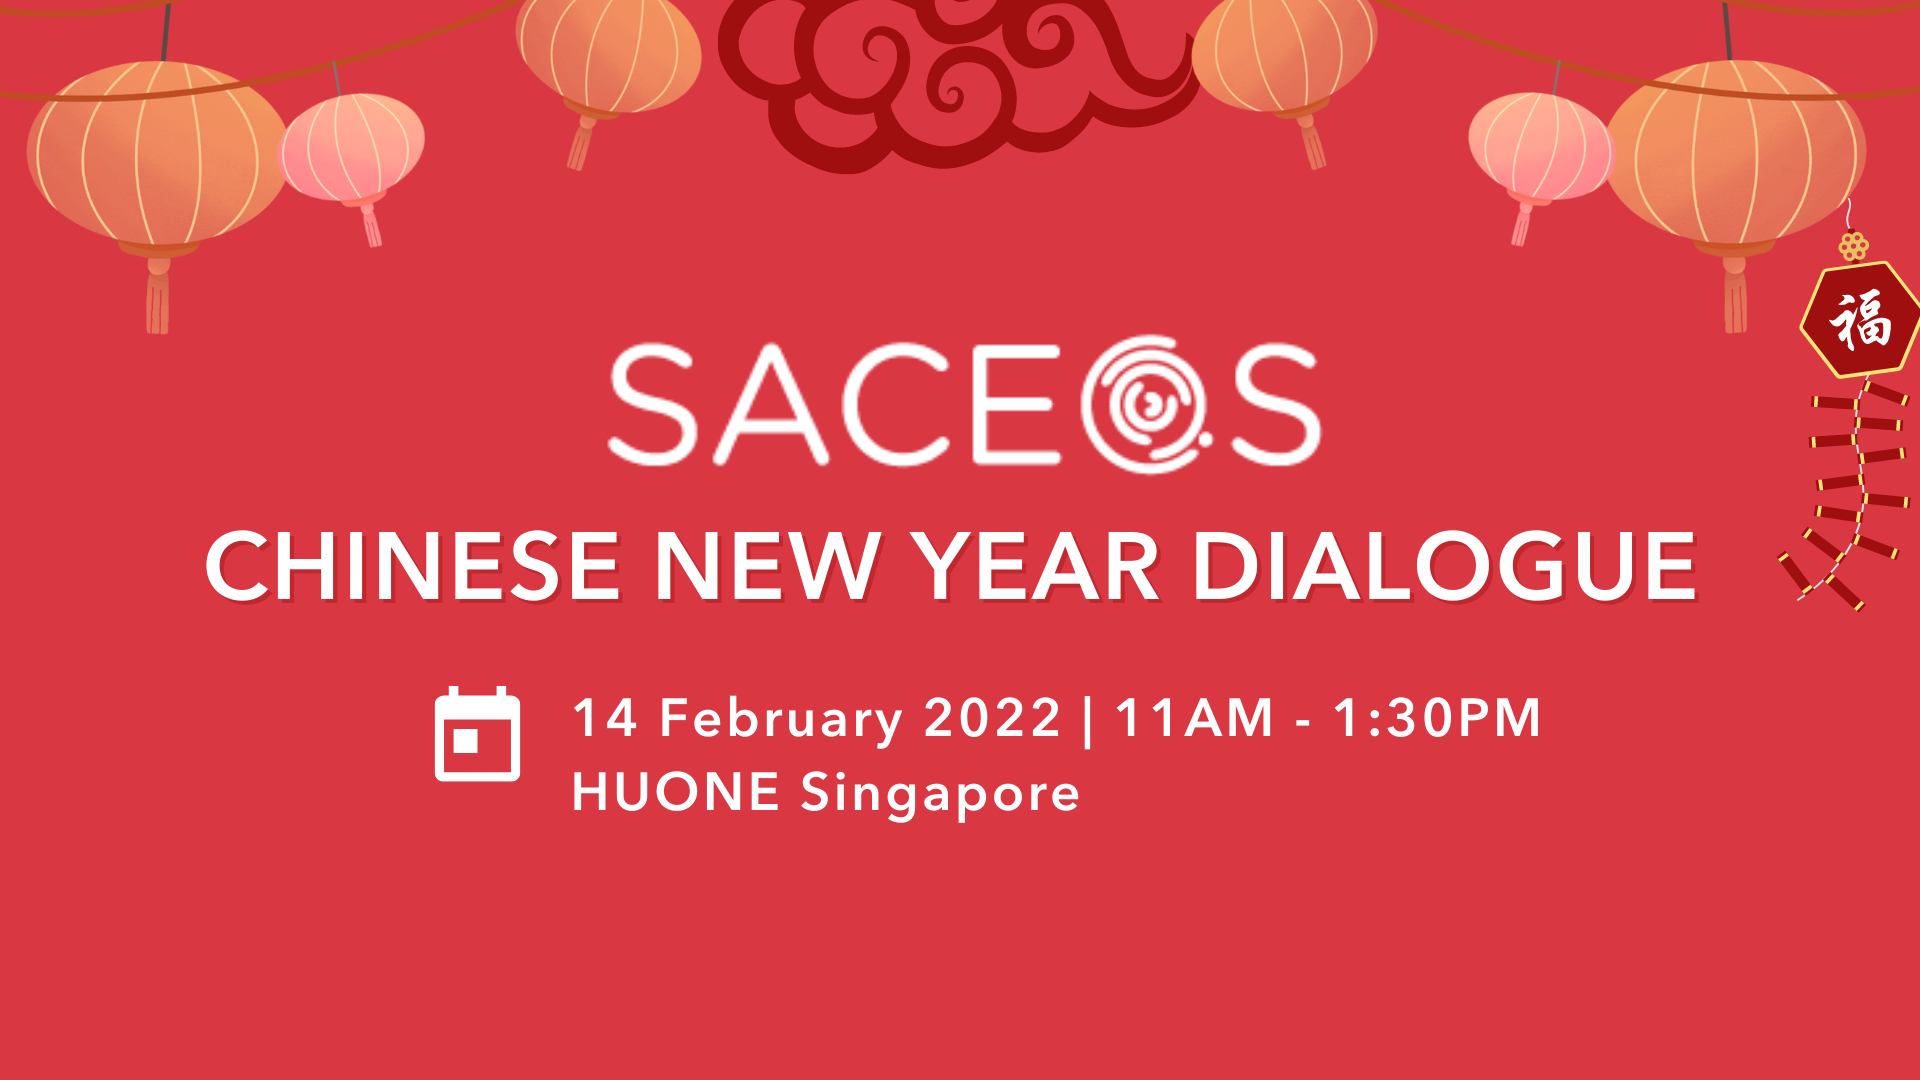 SACEOS Chinese New Year Dialogue